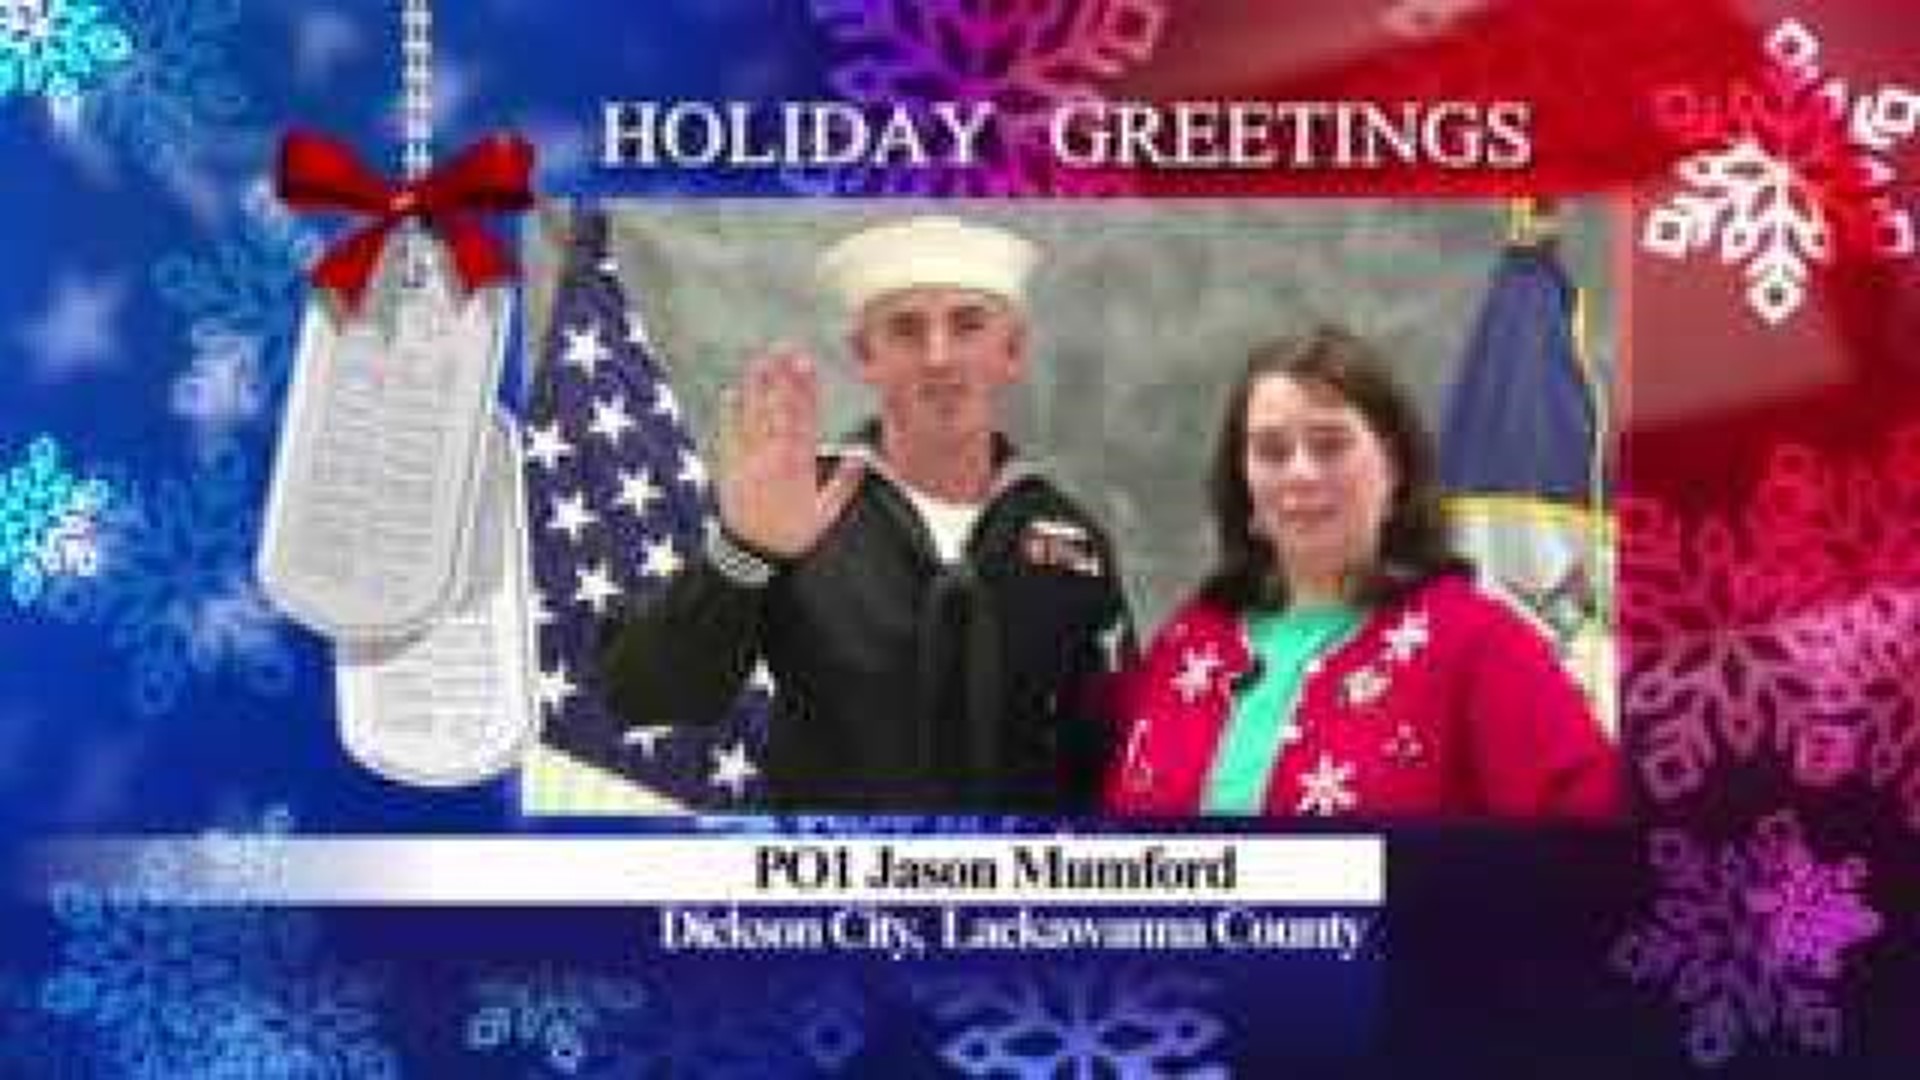 Military Greeting: PO1 Jason Mumford